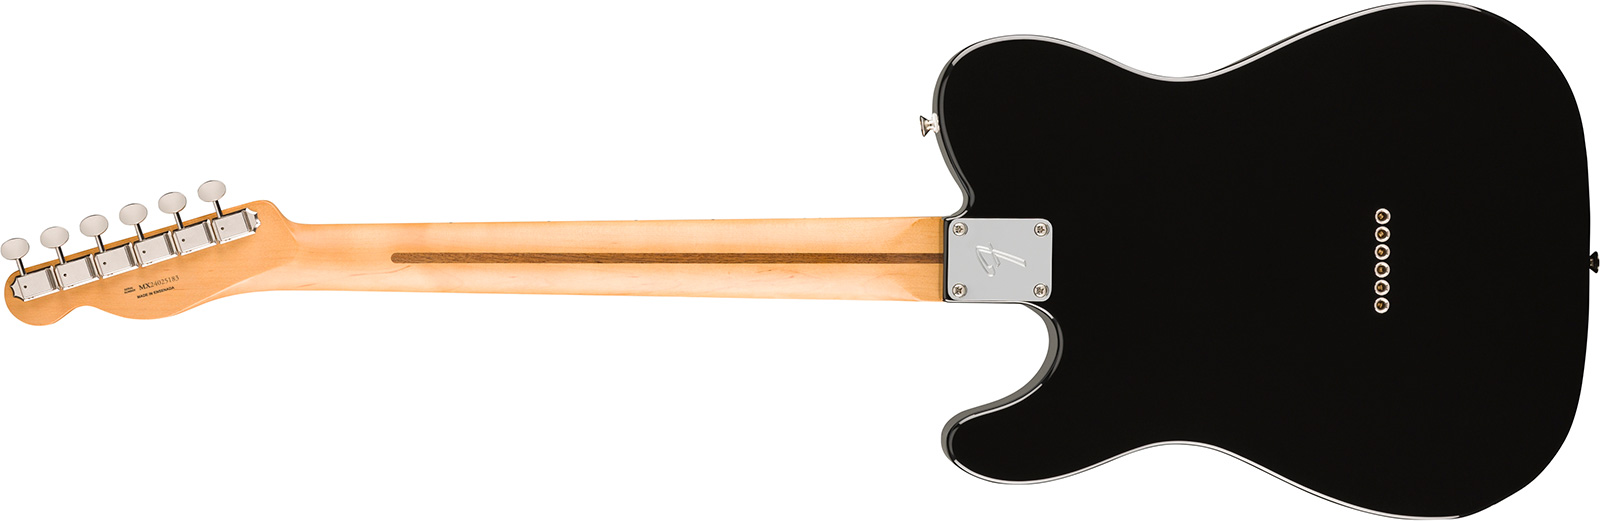 Fender Tele Player Ii Mex Aulne 2s Ht Mn - Black - Televorm elektrische gitaar - Variation 1